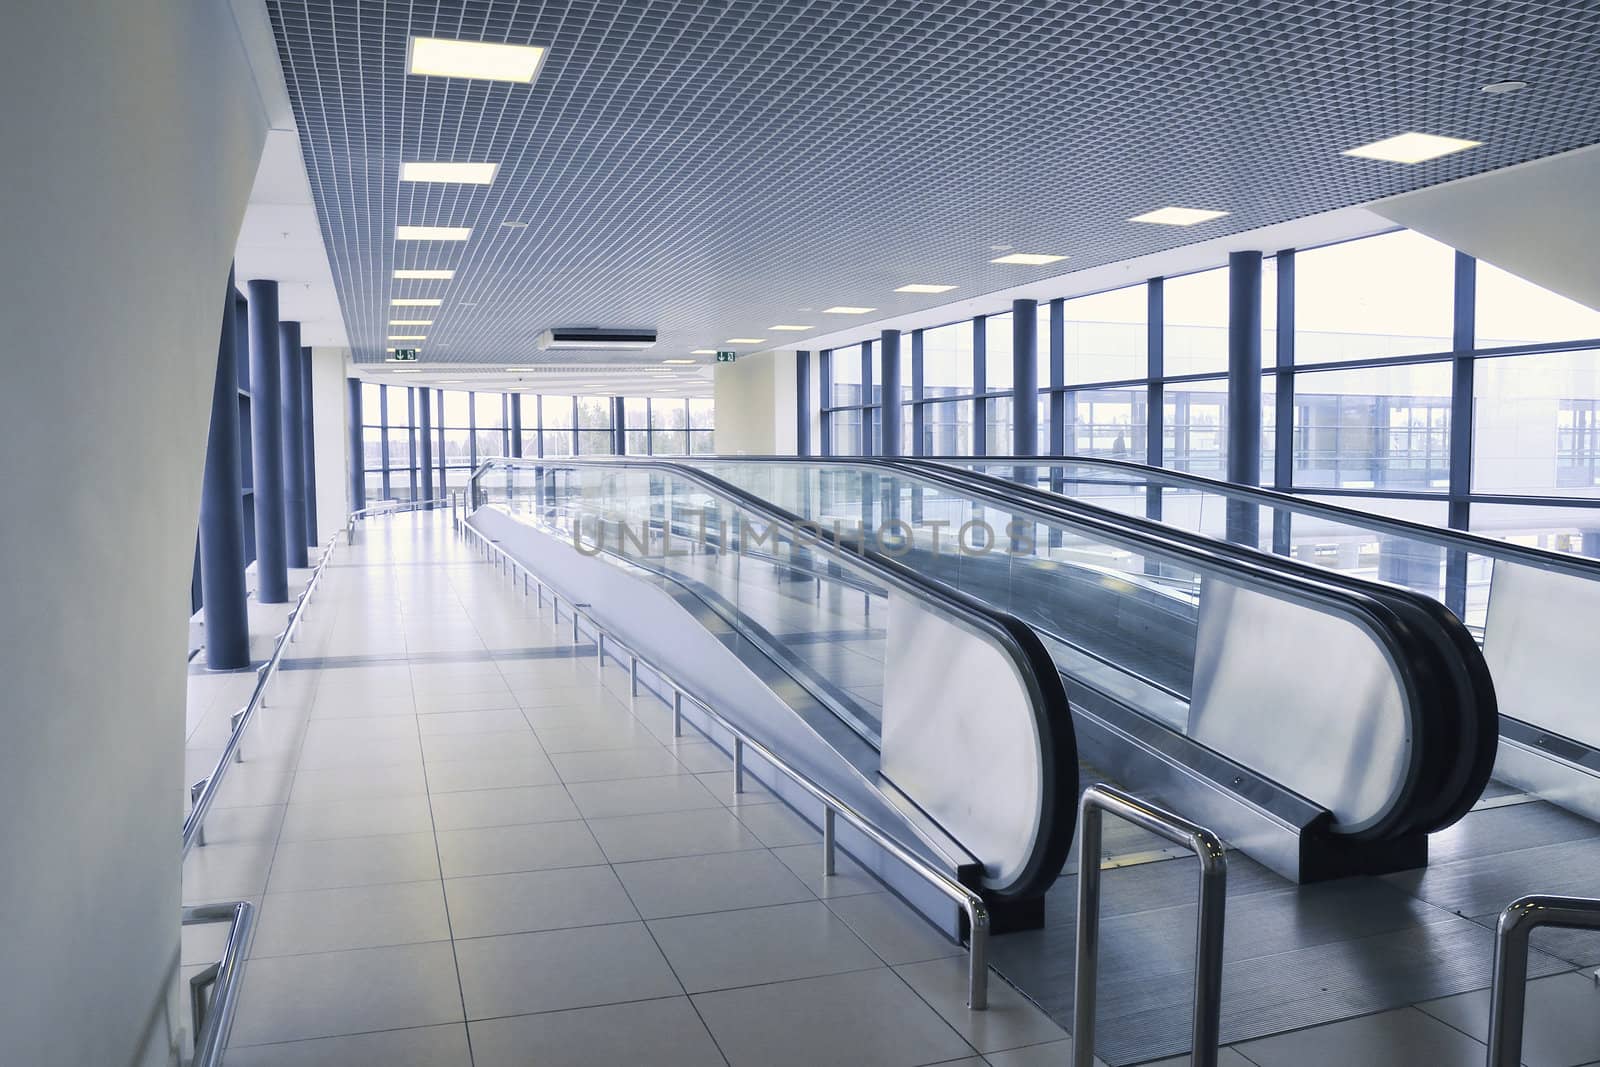 pedestrian pathway inside modern airport building